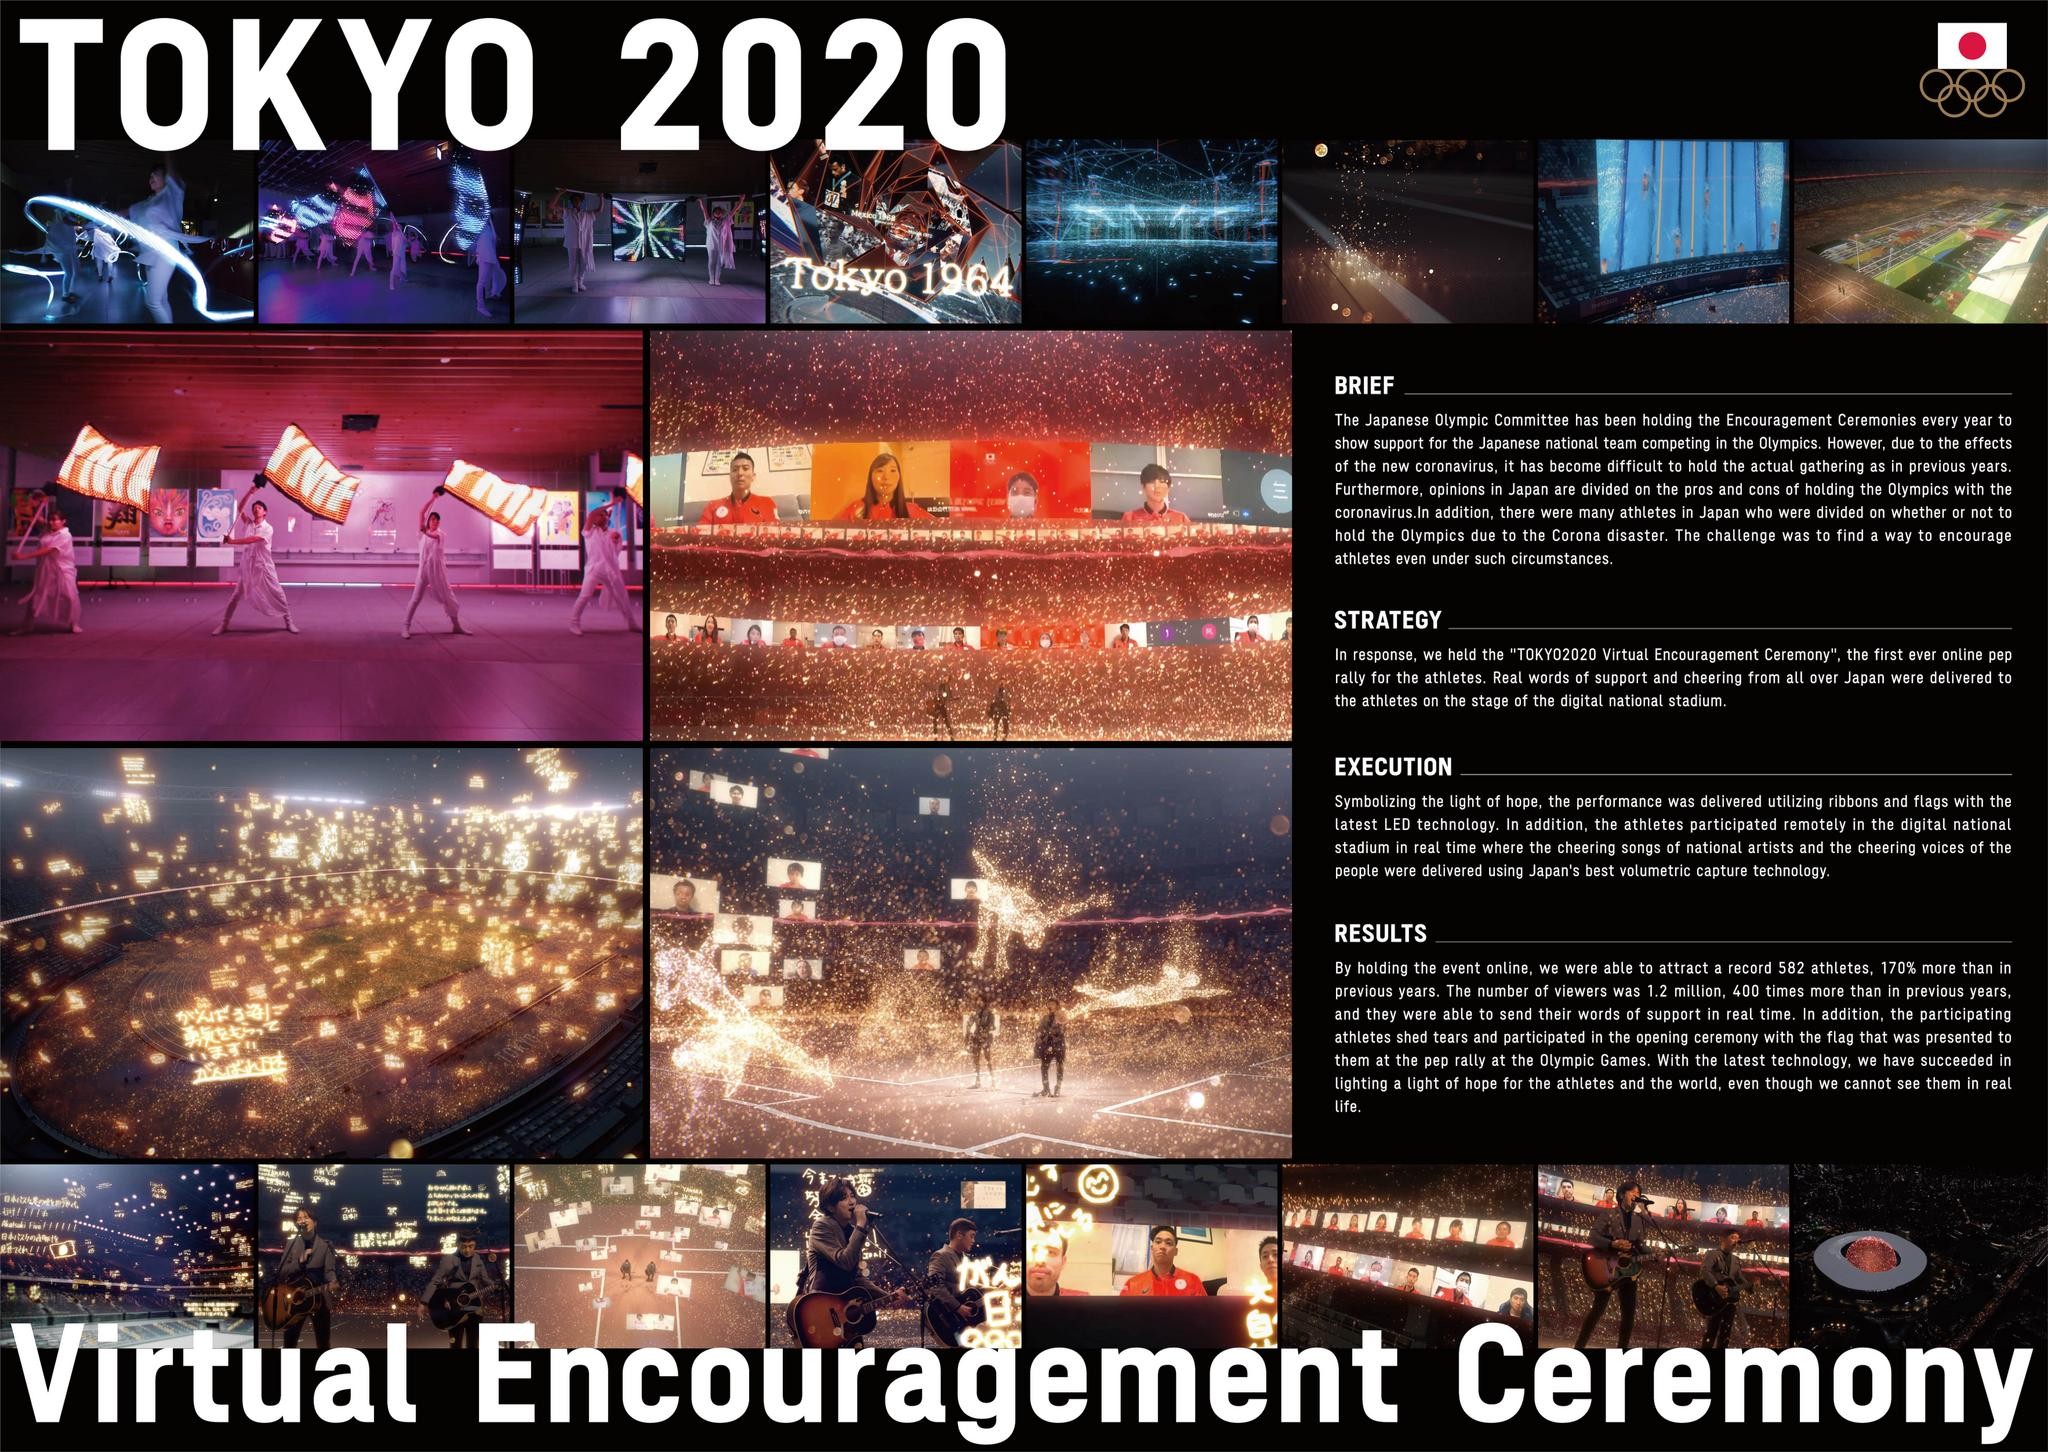 TOKYO 2020 Virtual Encouragement Ceremony